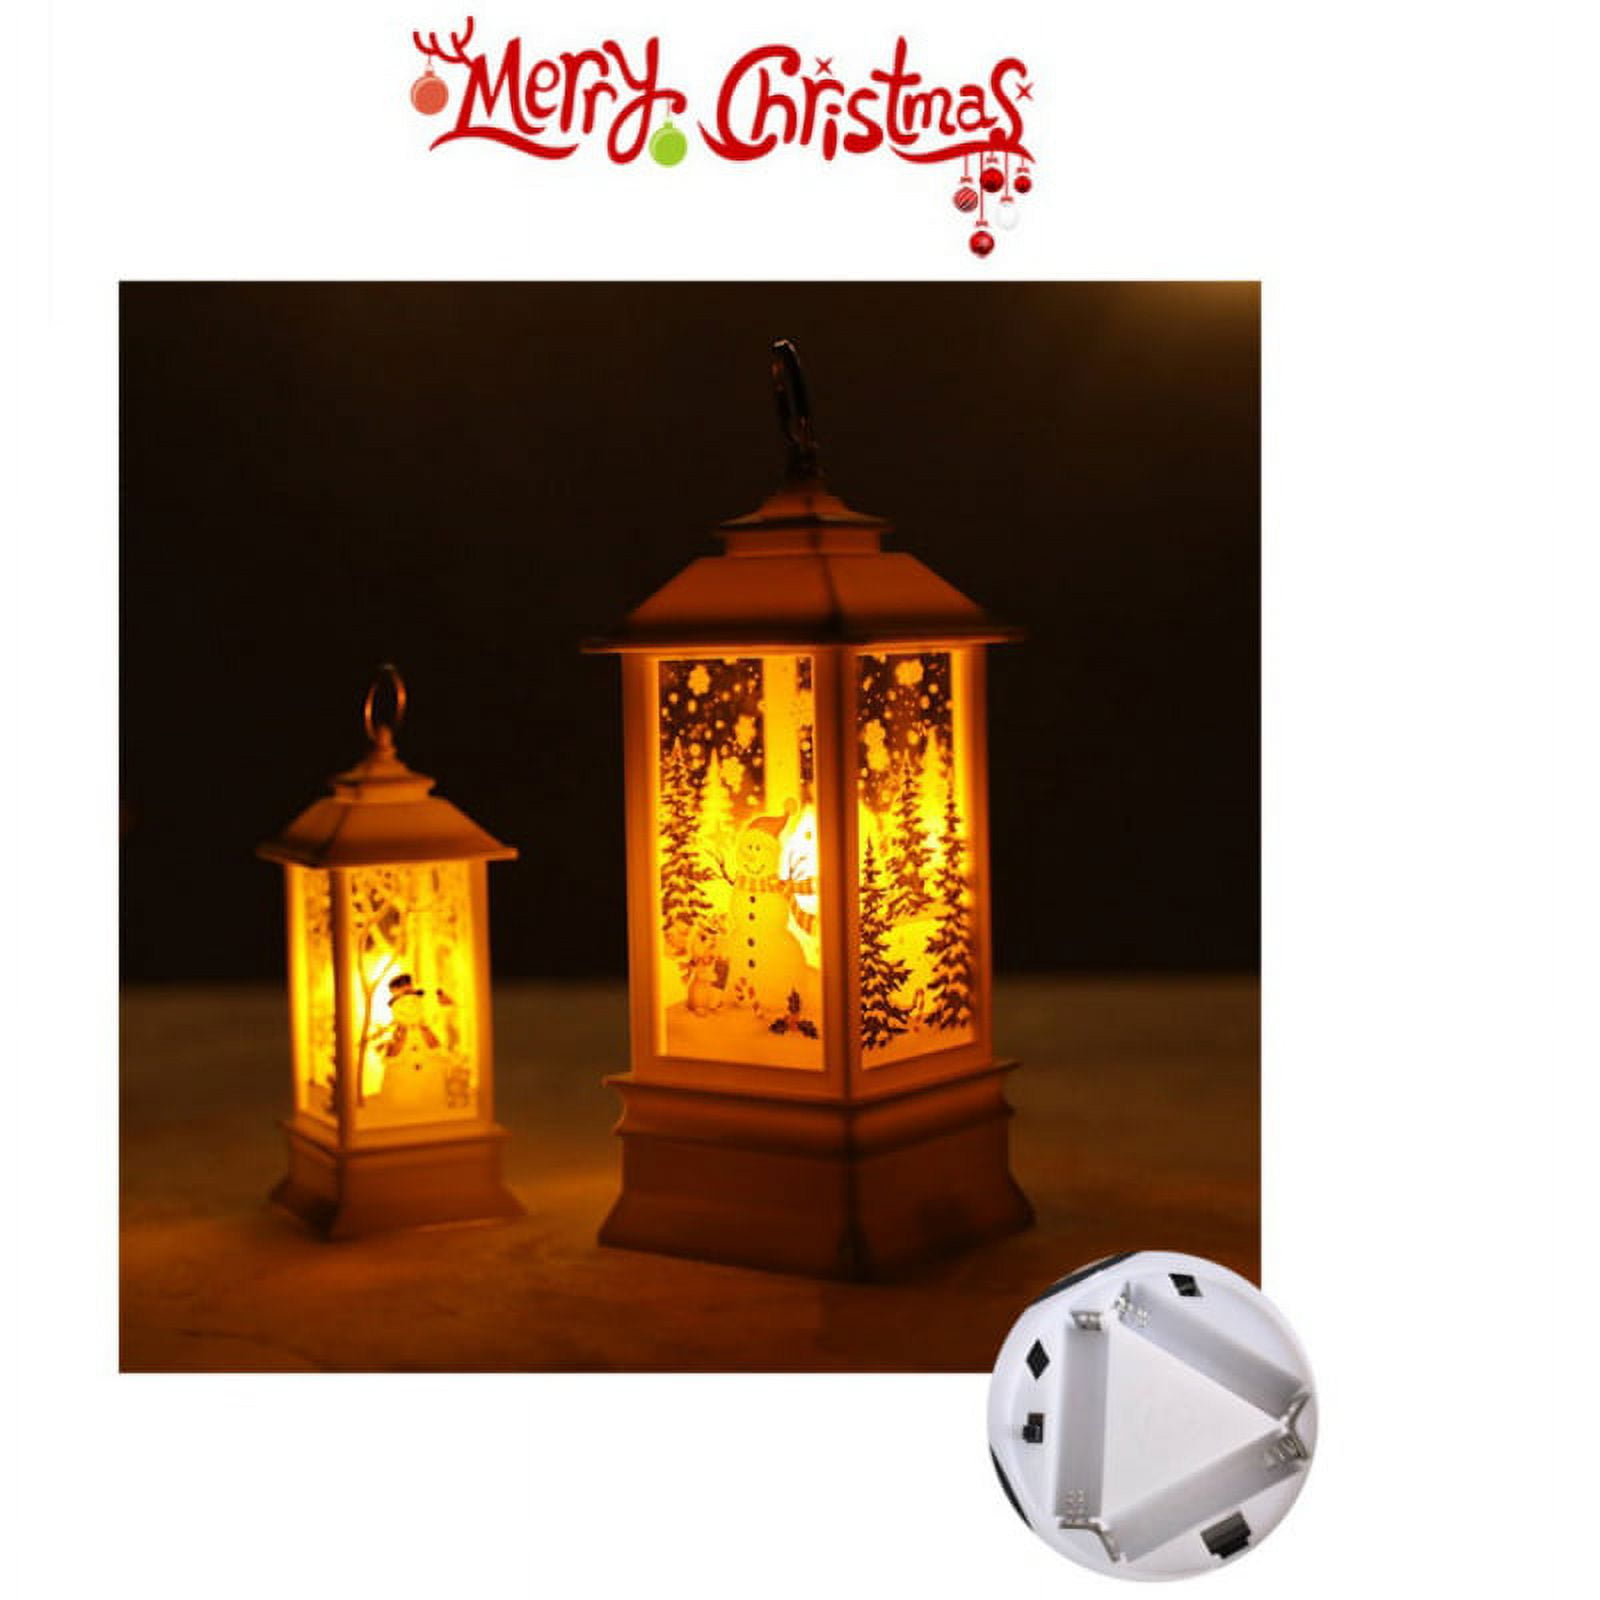 Travelwant Lantern with LED,Battery Included,Decorative Hanging Lantern,Christmas Decorative Lantern,Indoor Candle Lantern,Battery Lantern Indoor Use